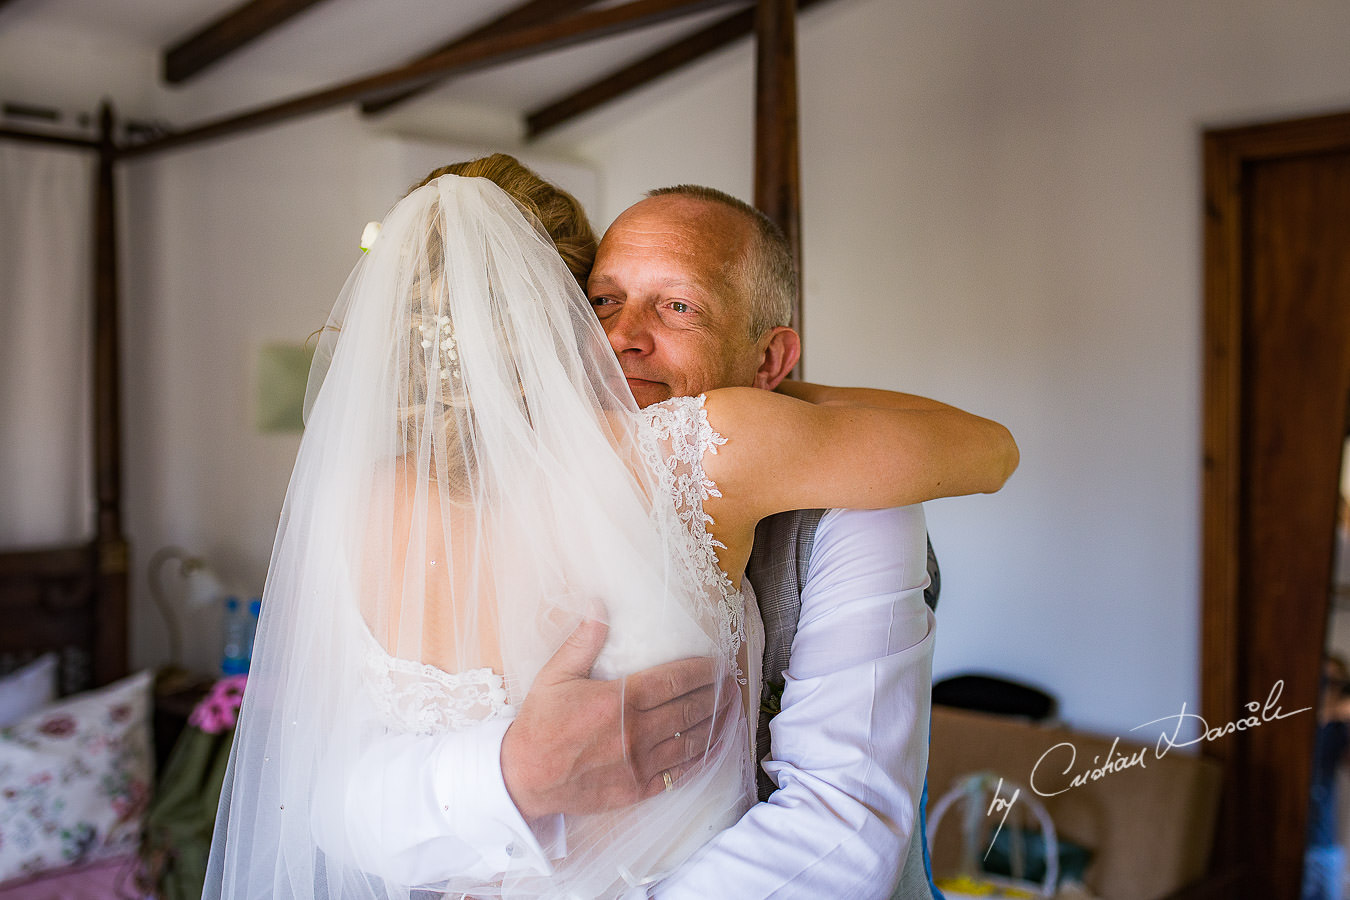 Genuine wedding moments captured at a Vasilias Nikoklis Inn Wedding in Paphos. Cyprus Wedding Photography by Cristian Dascalu.